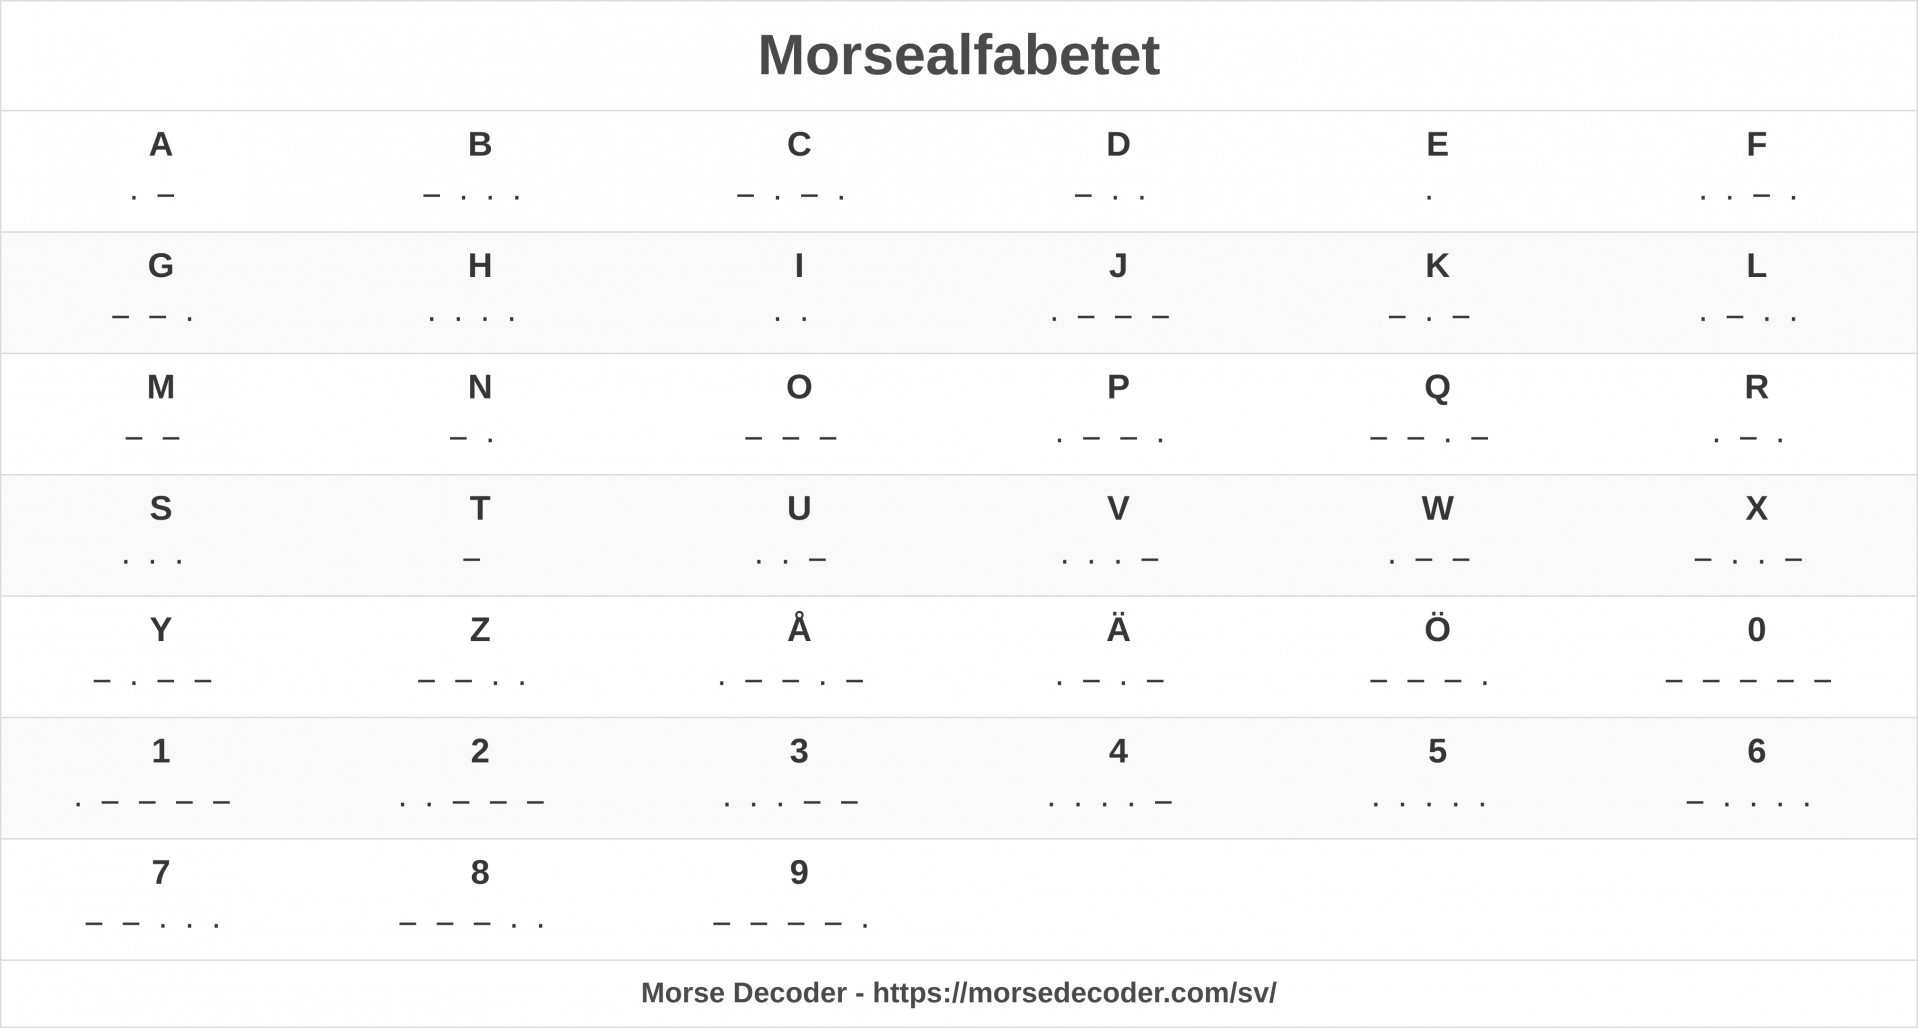 Morsealfabetet